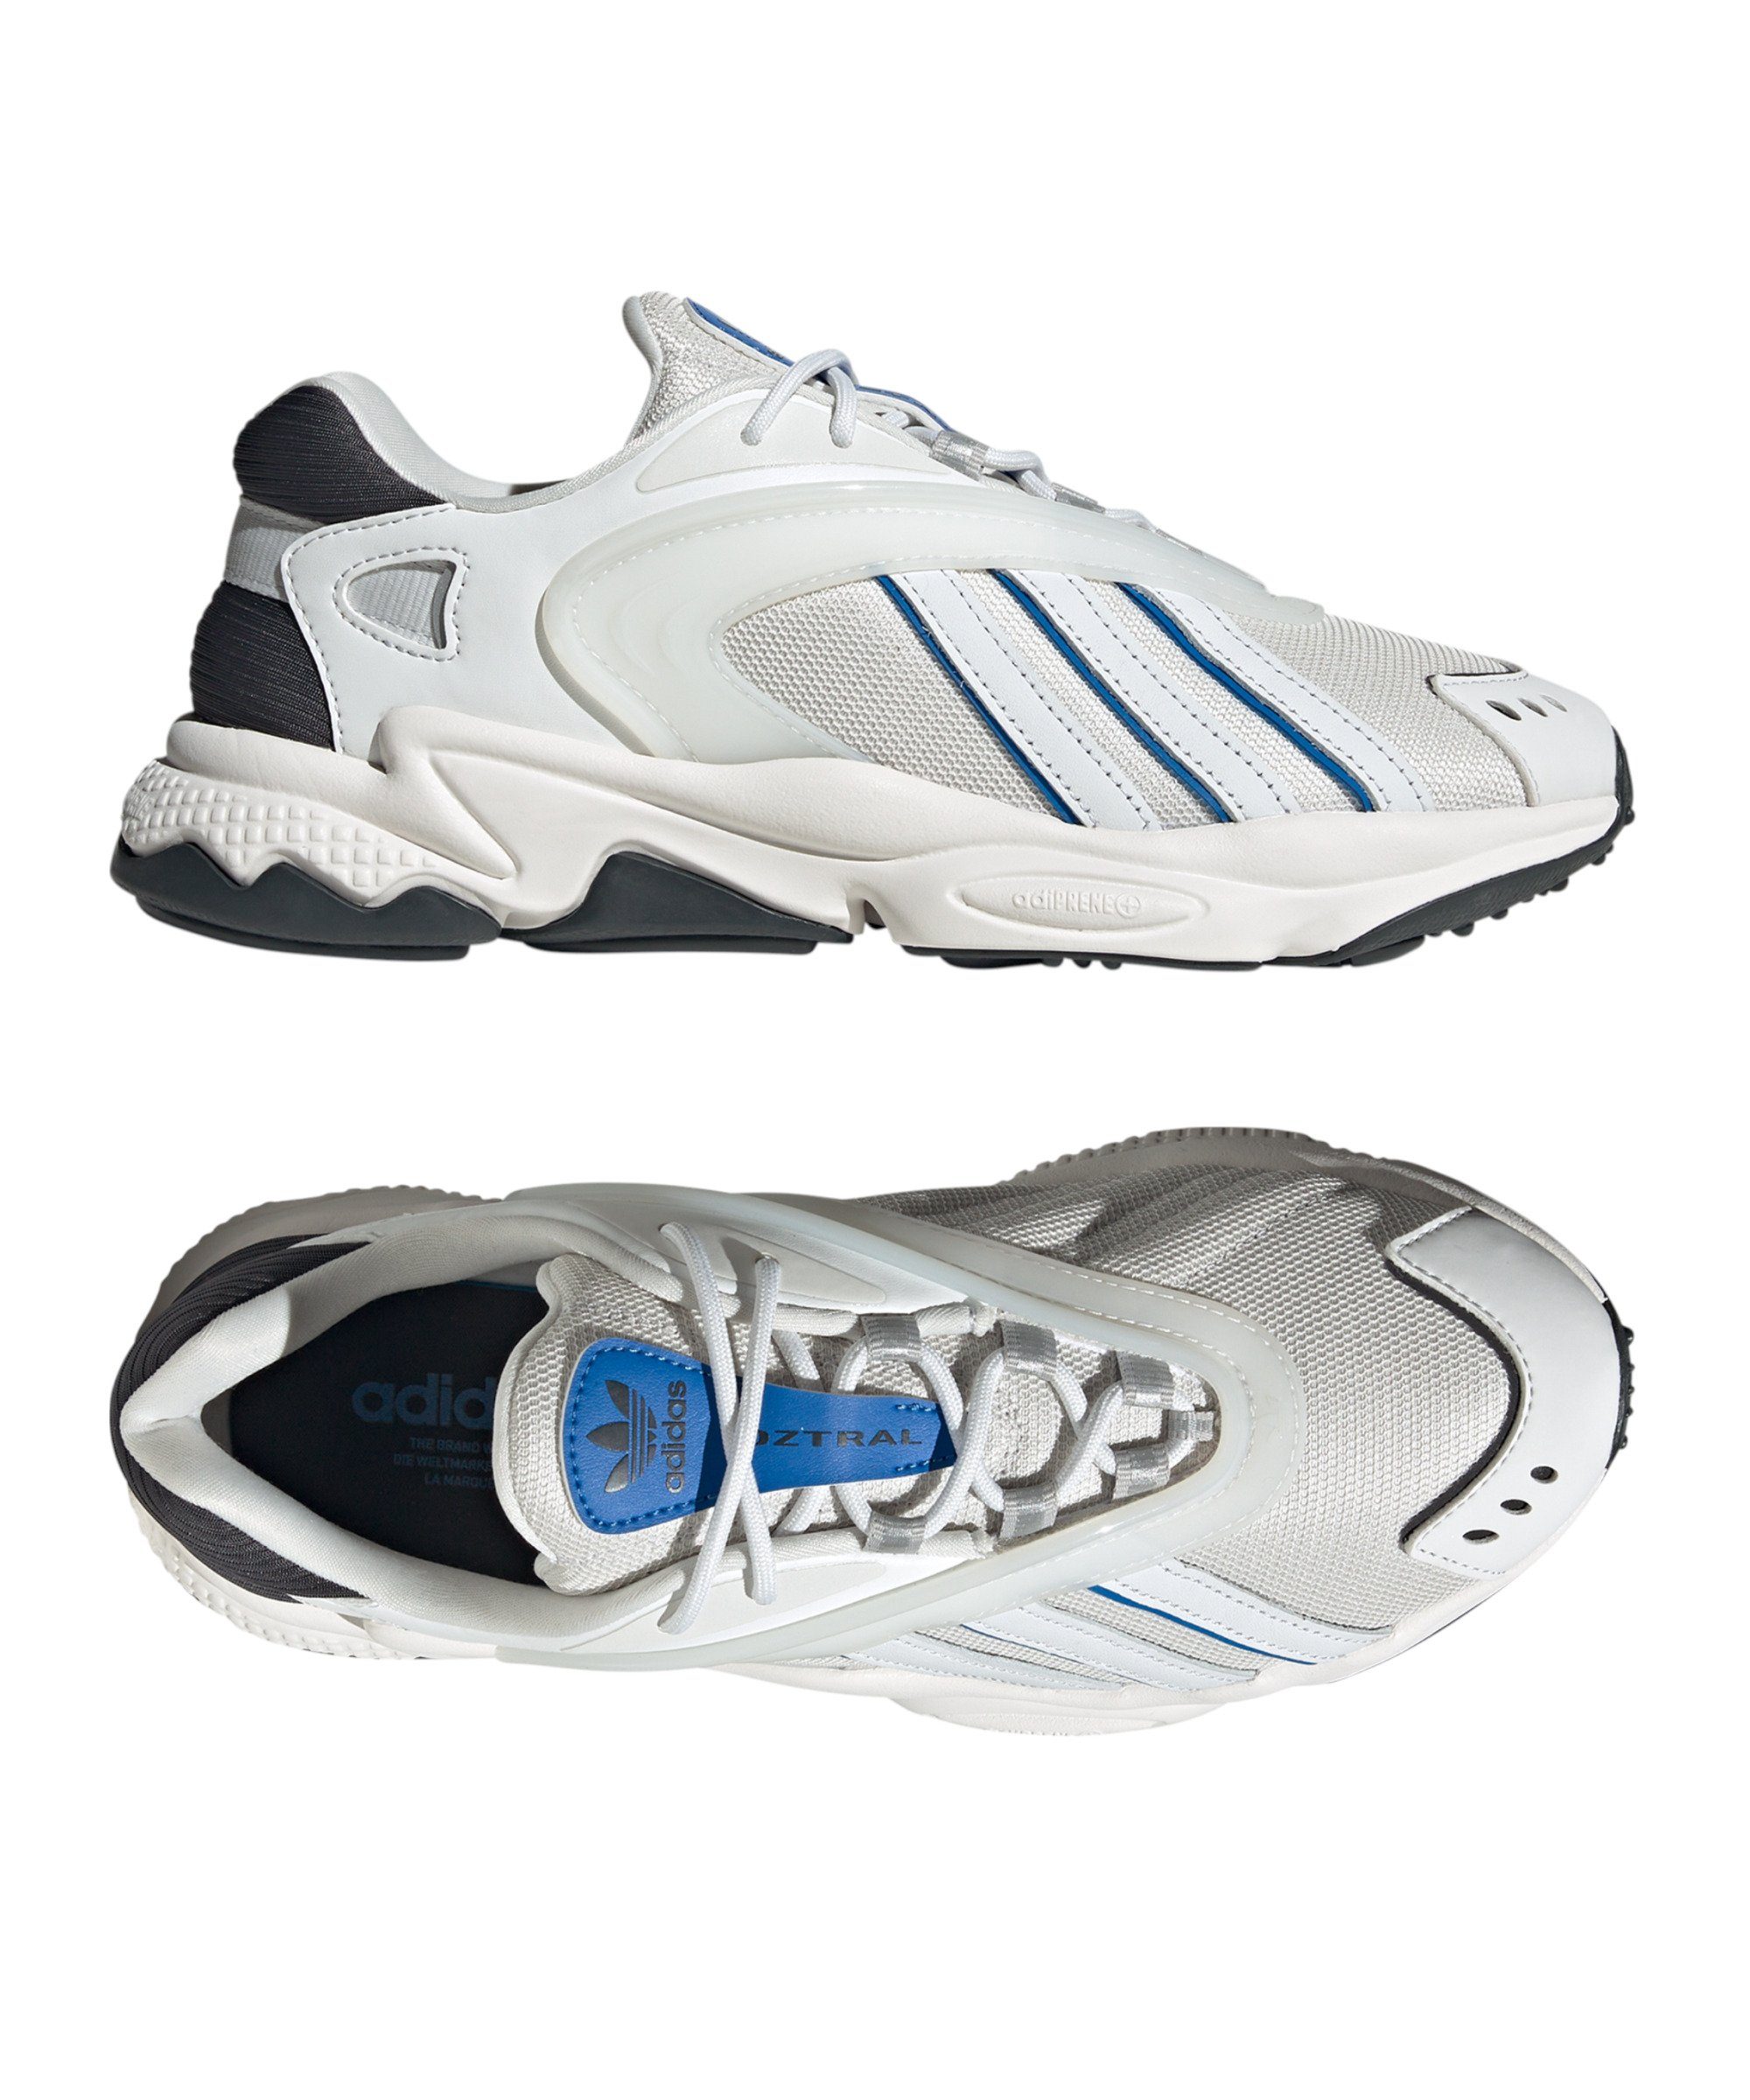 adidas Originals Oztral Sneaker weissweissblau